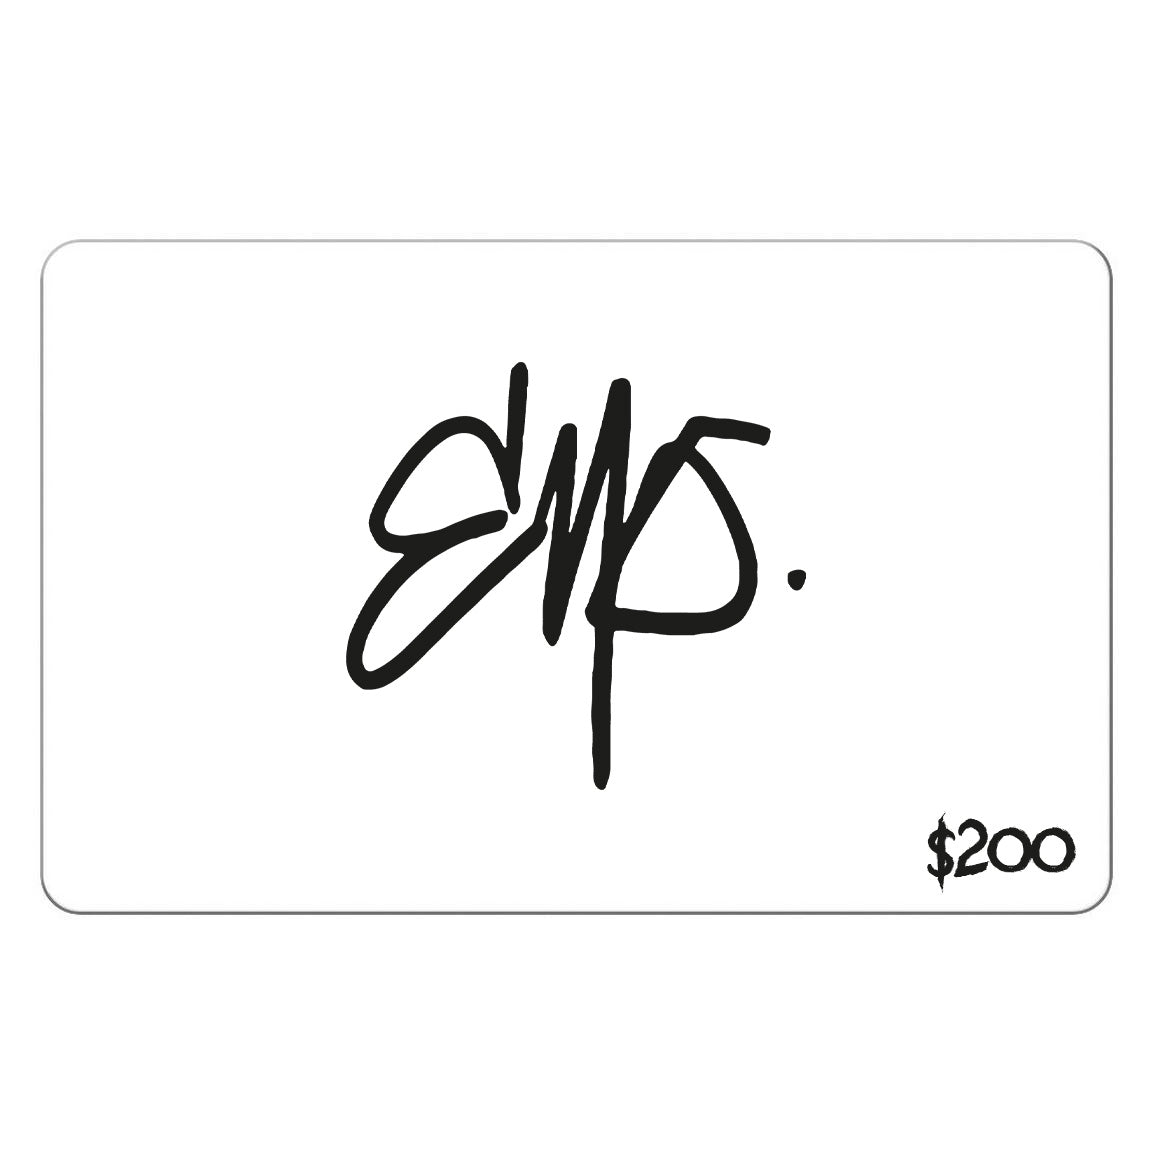 END signature logo gift card - $200